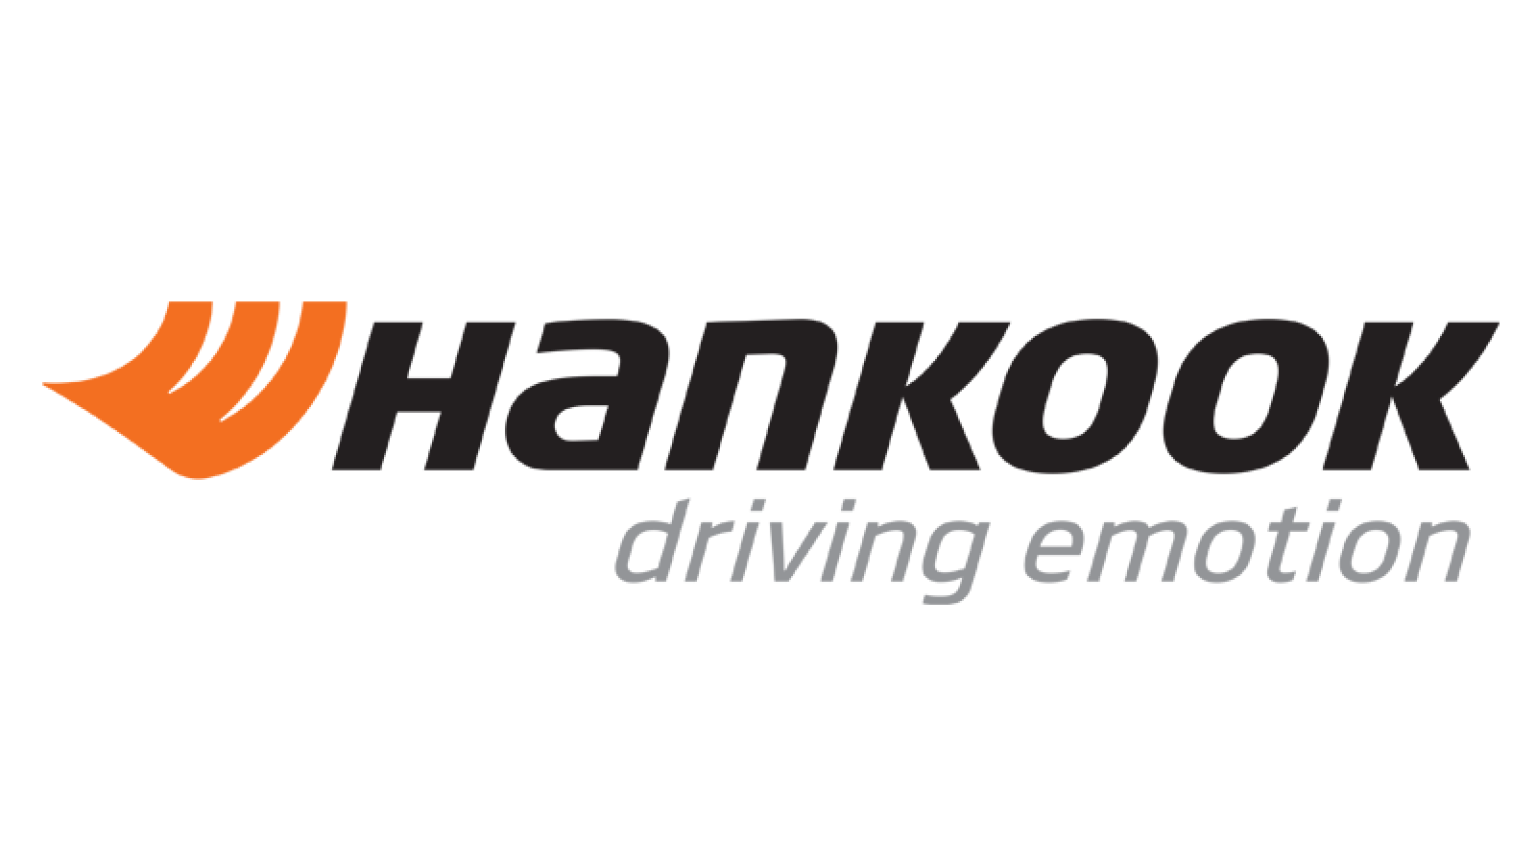 717b0f0c/hankook logo grid png